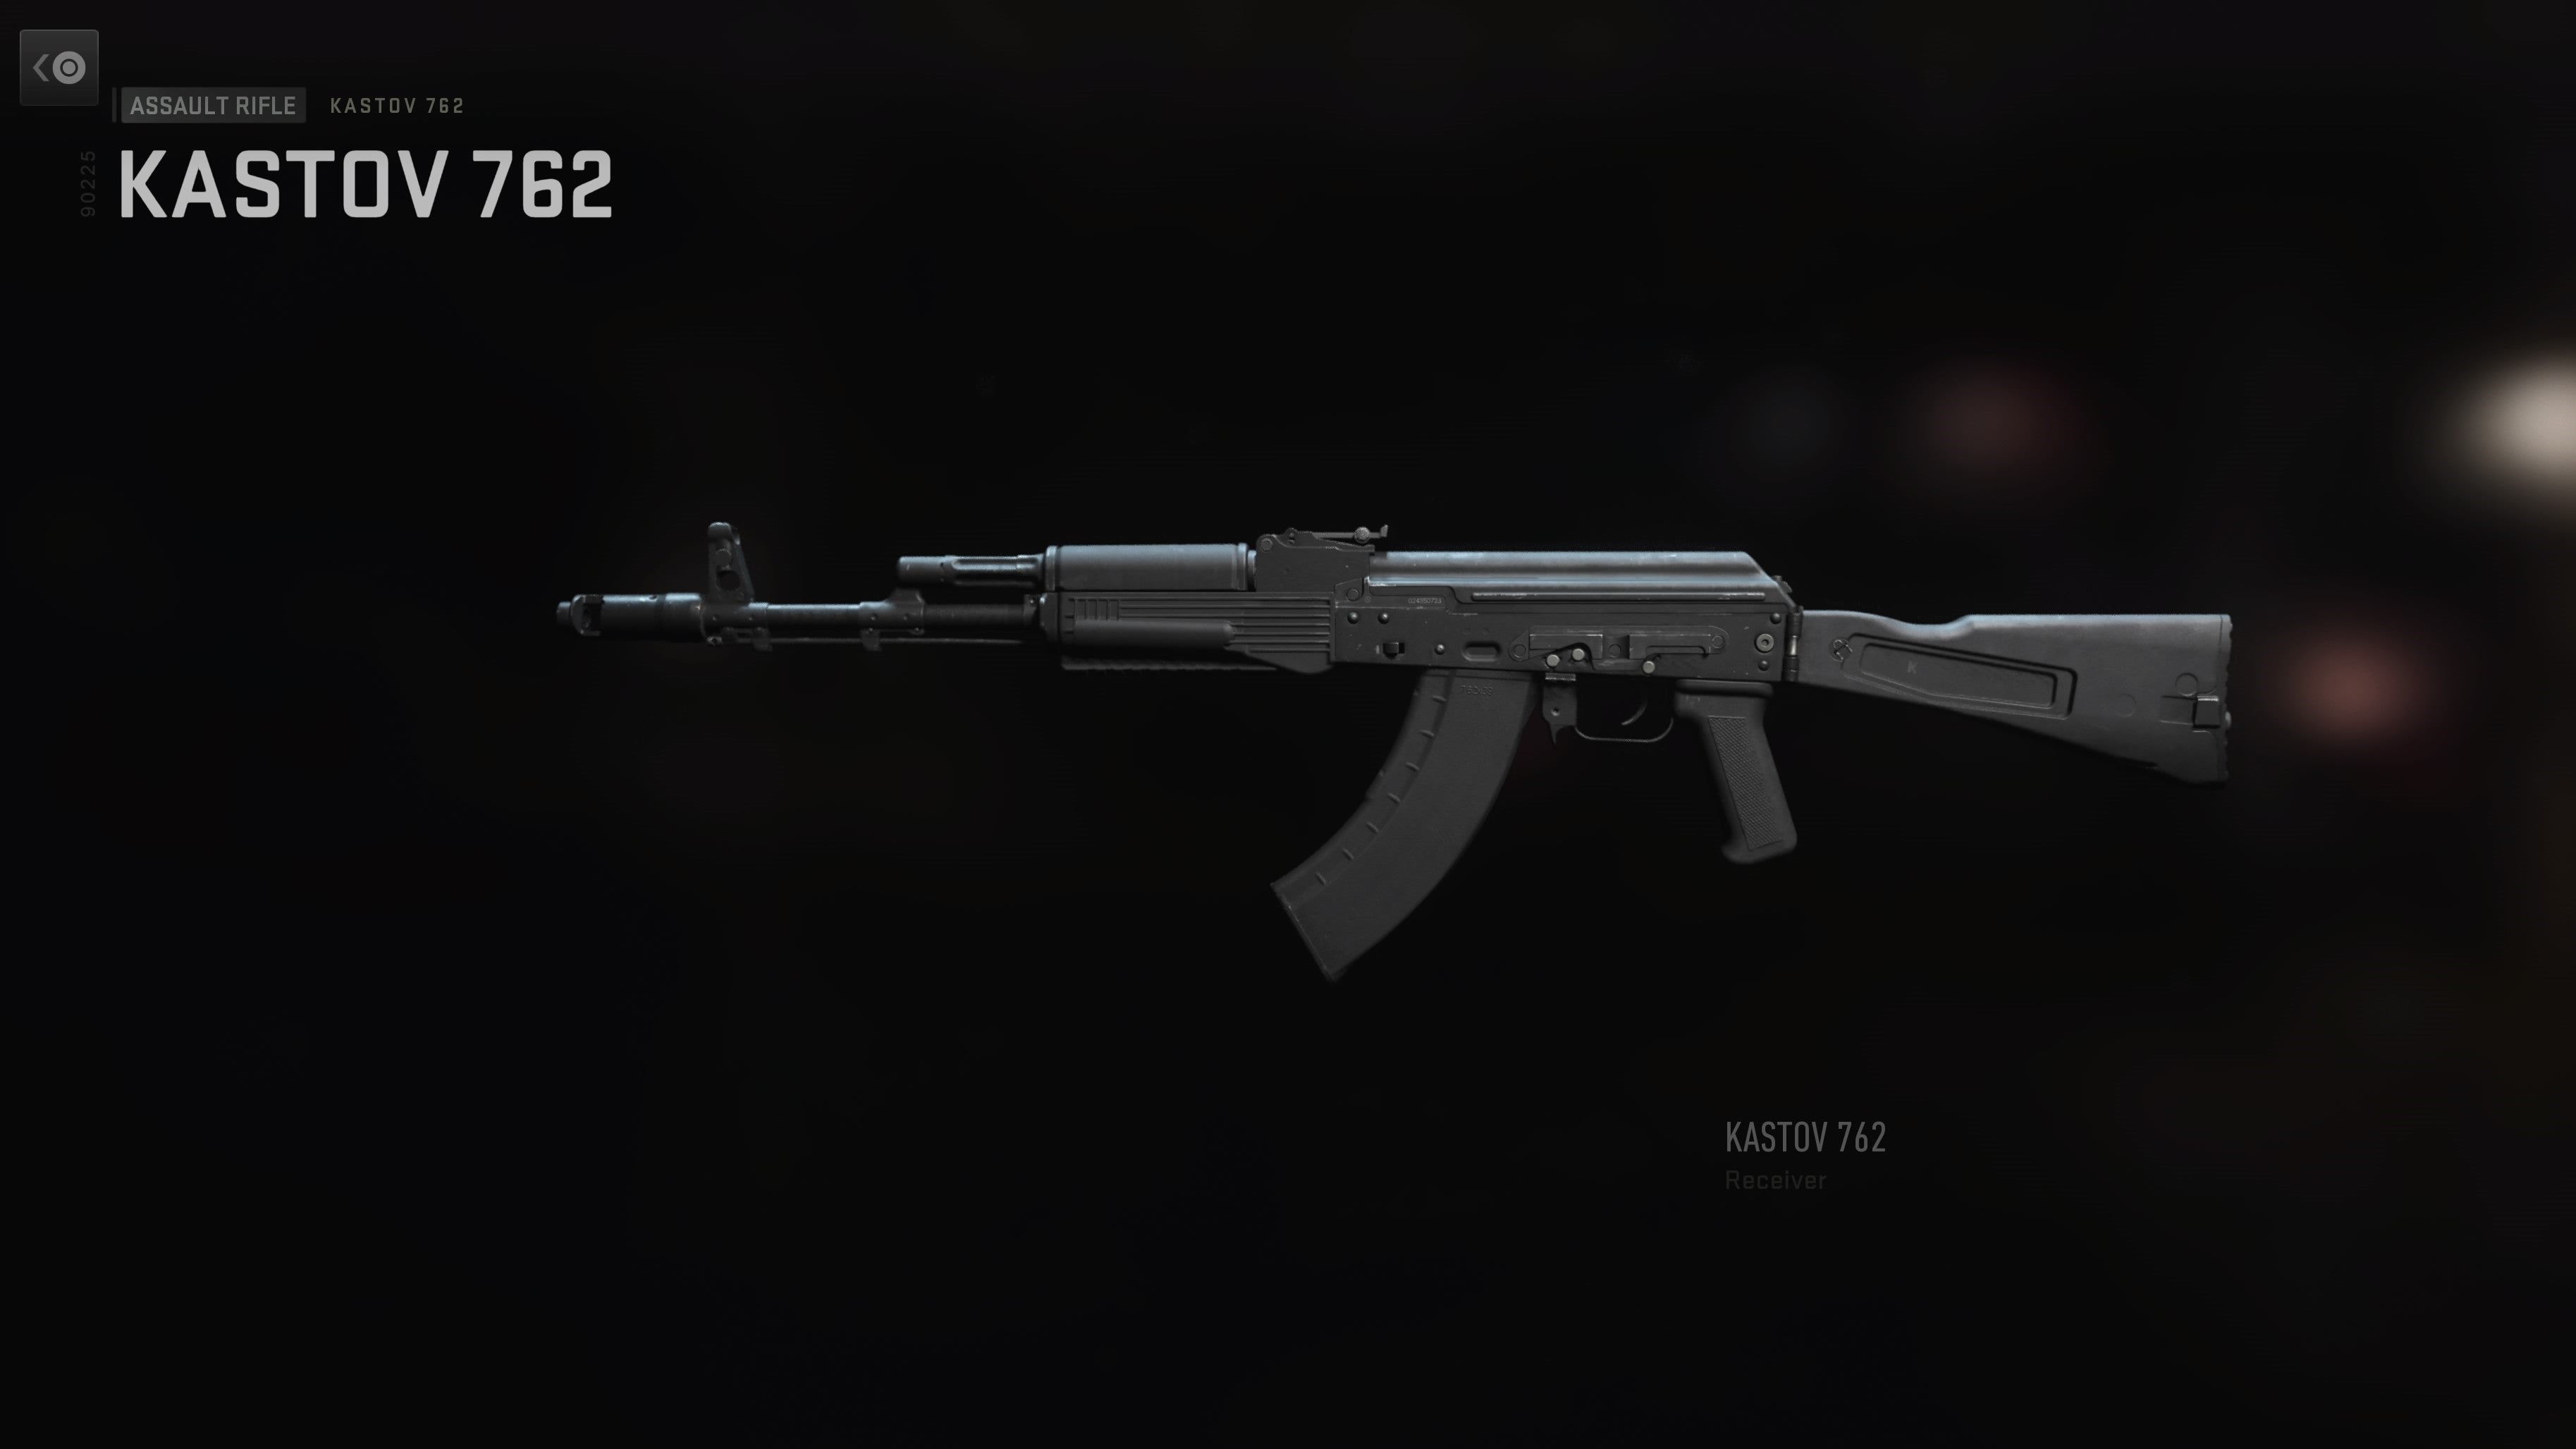 Kastov 762 assault rifle in Warzone 2